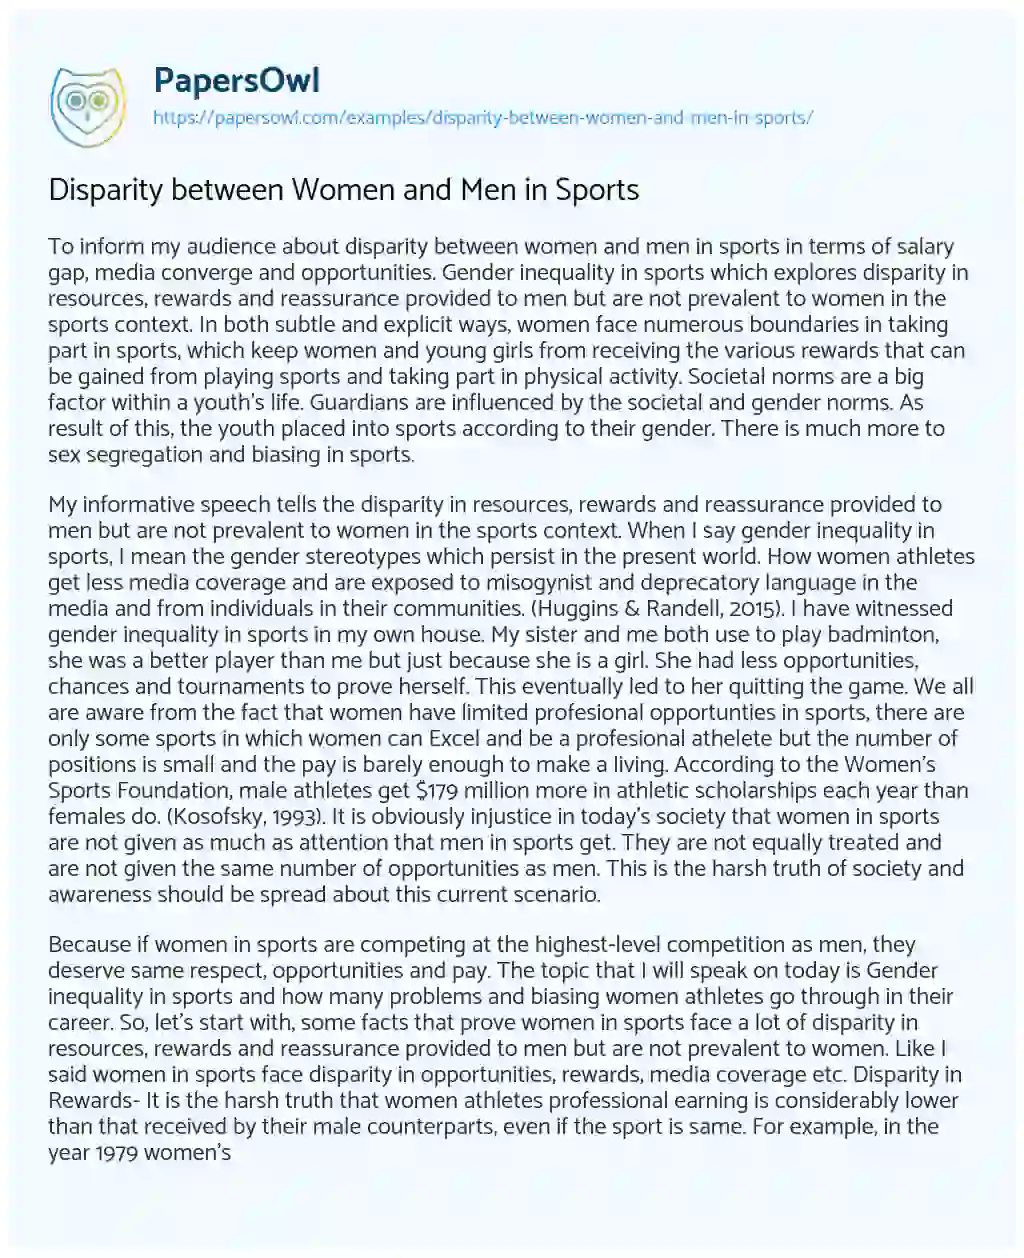 Essay on Disparity between Women and Men in Sports